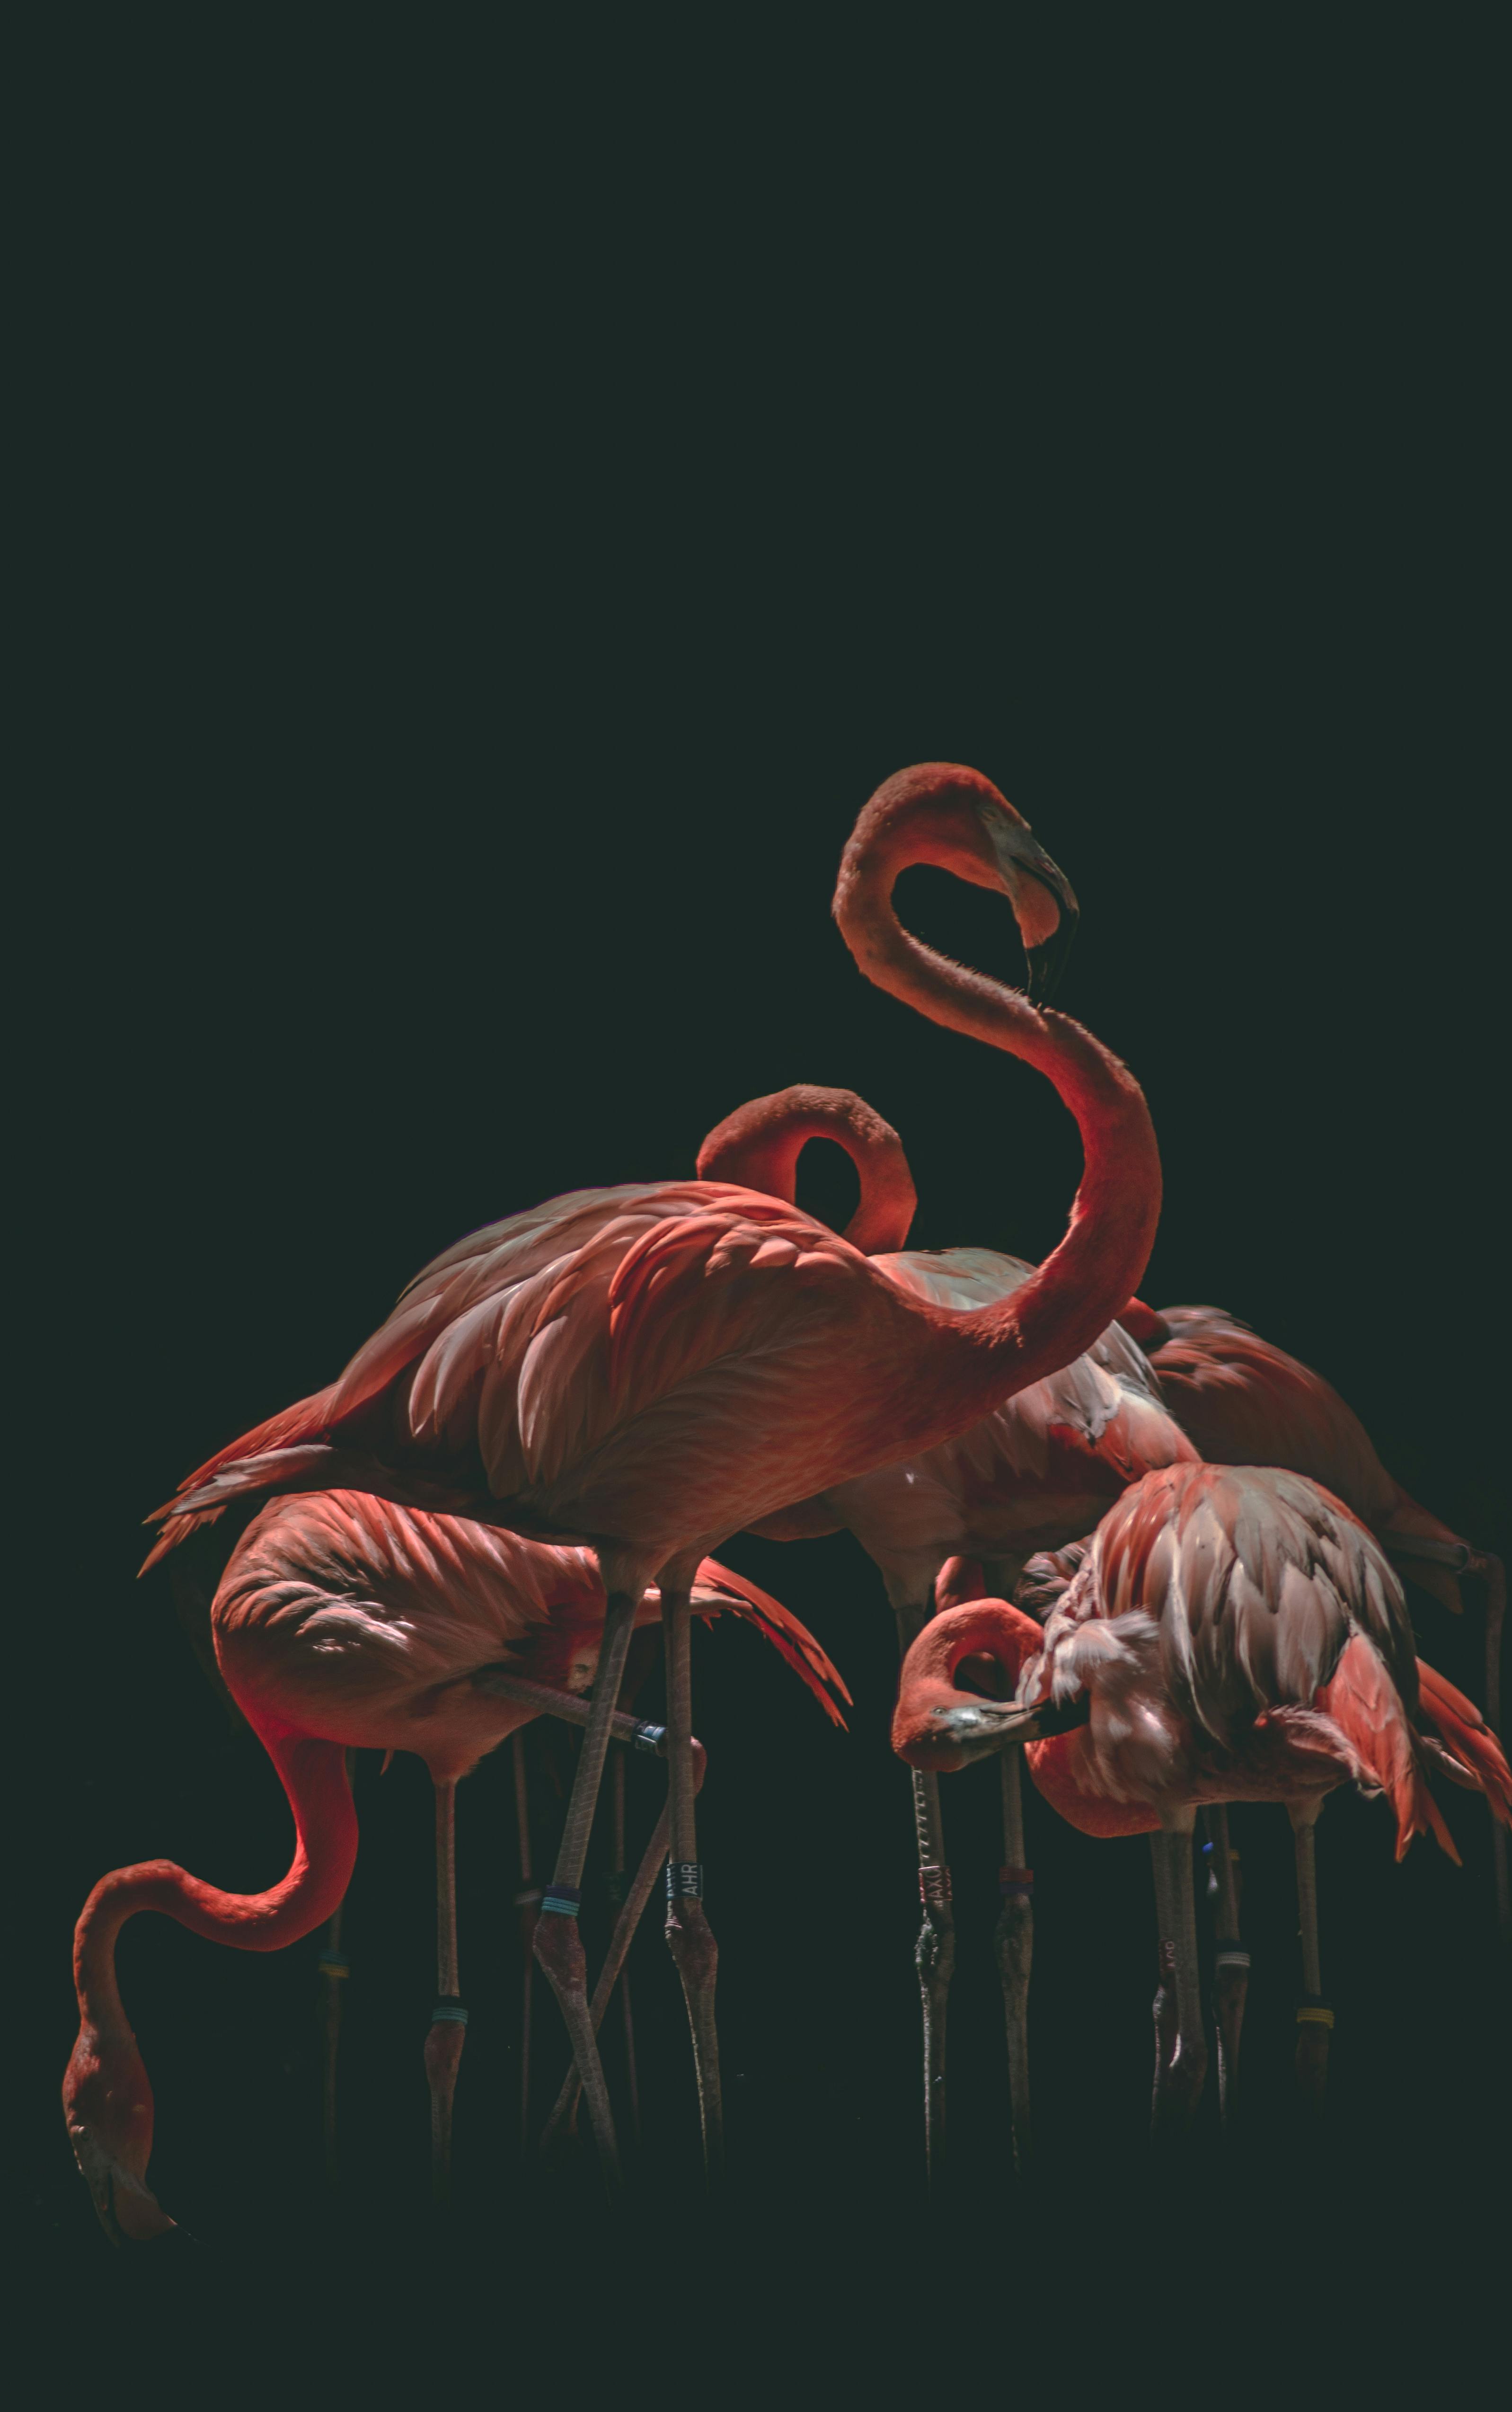 Flamingo Photos, Download The BEST Free Flamingo Stock Photos & HD Images